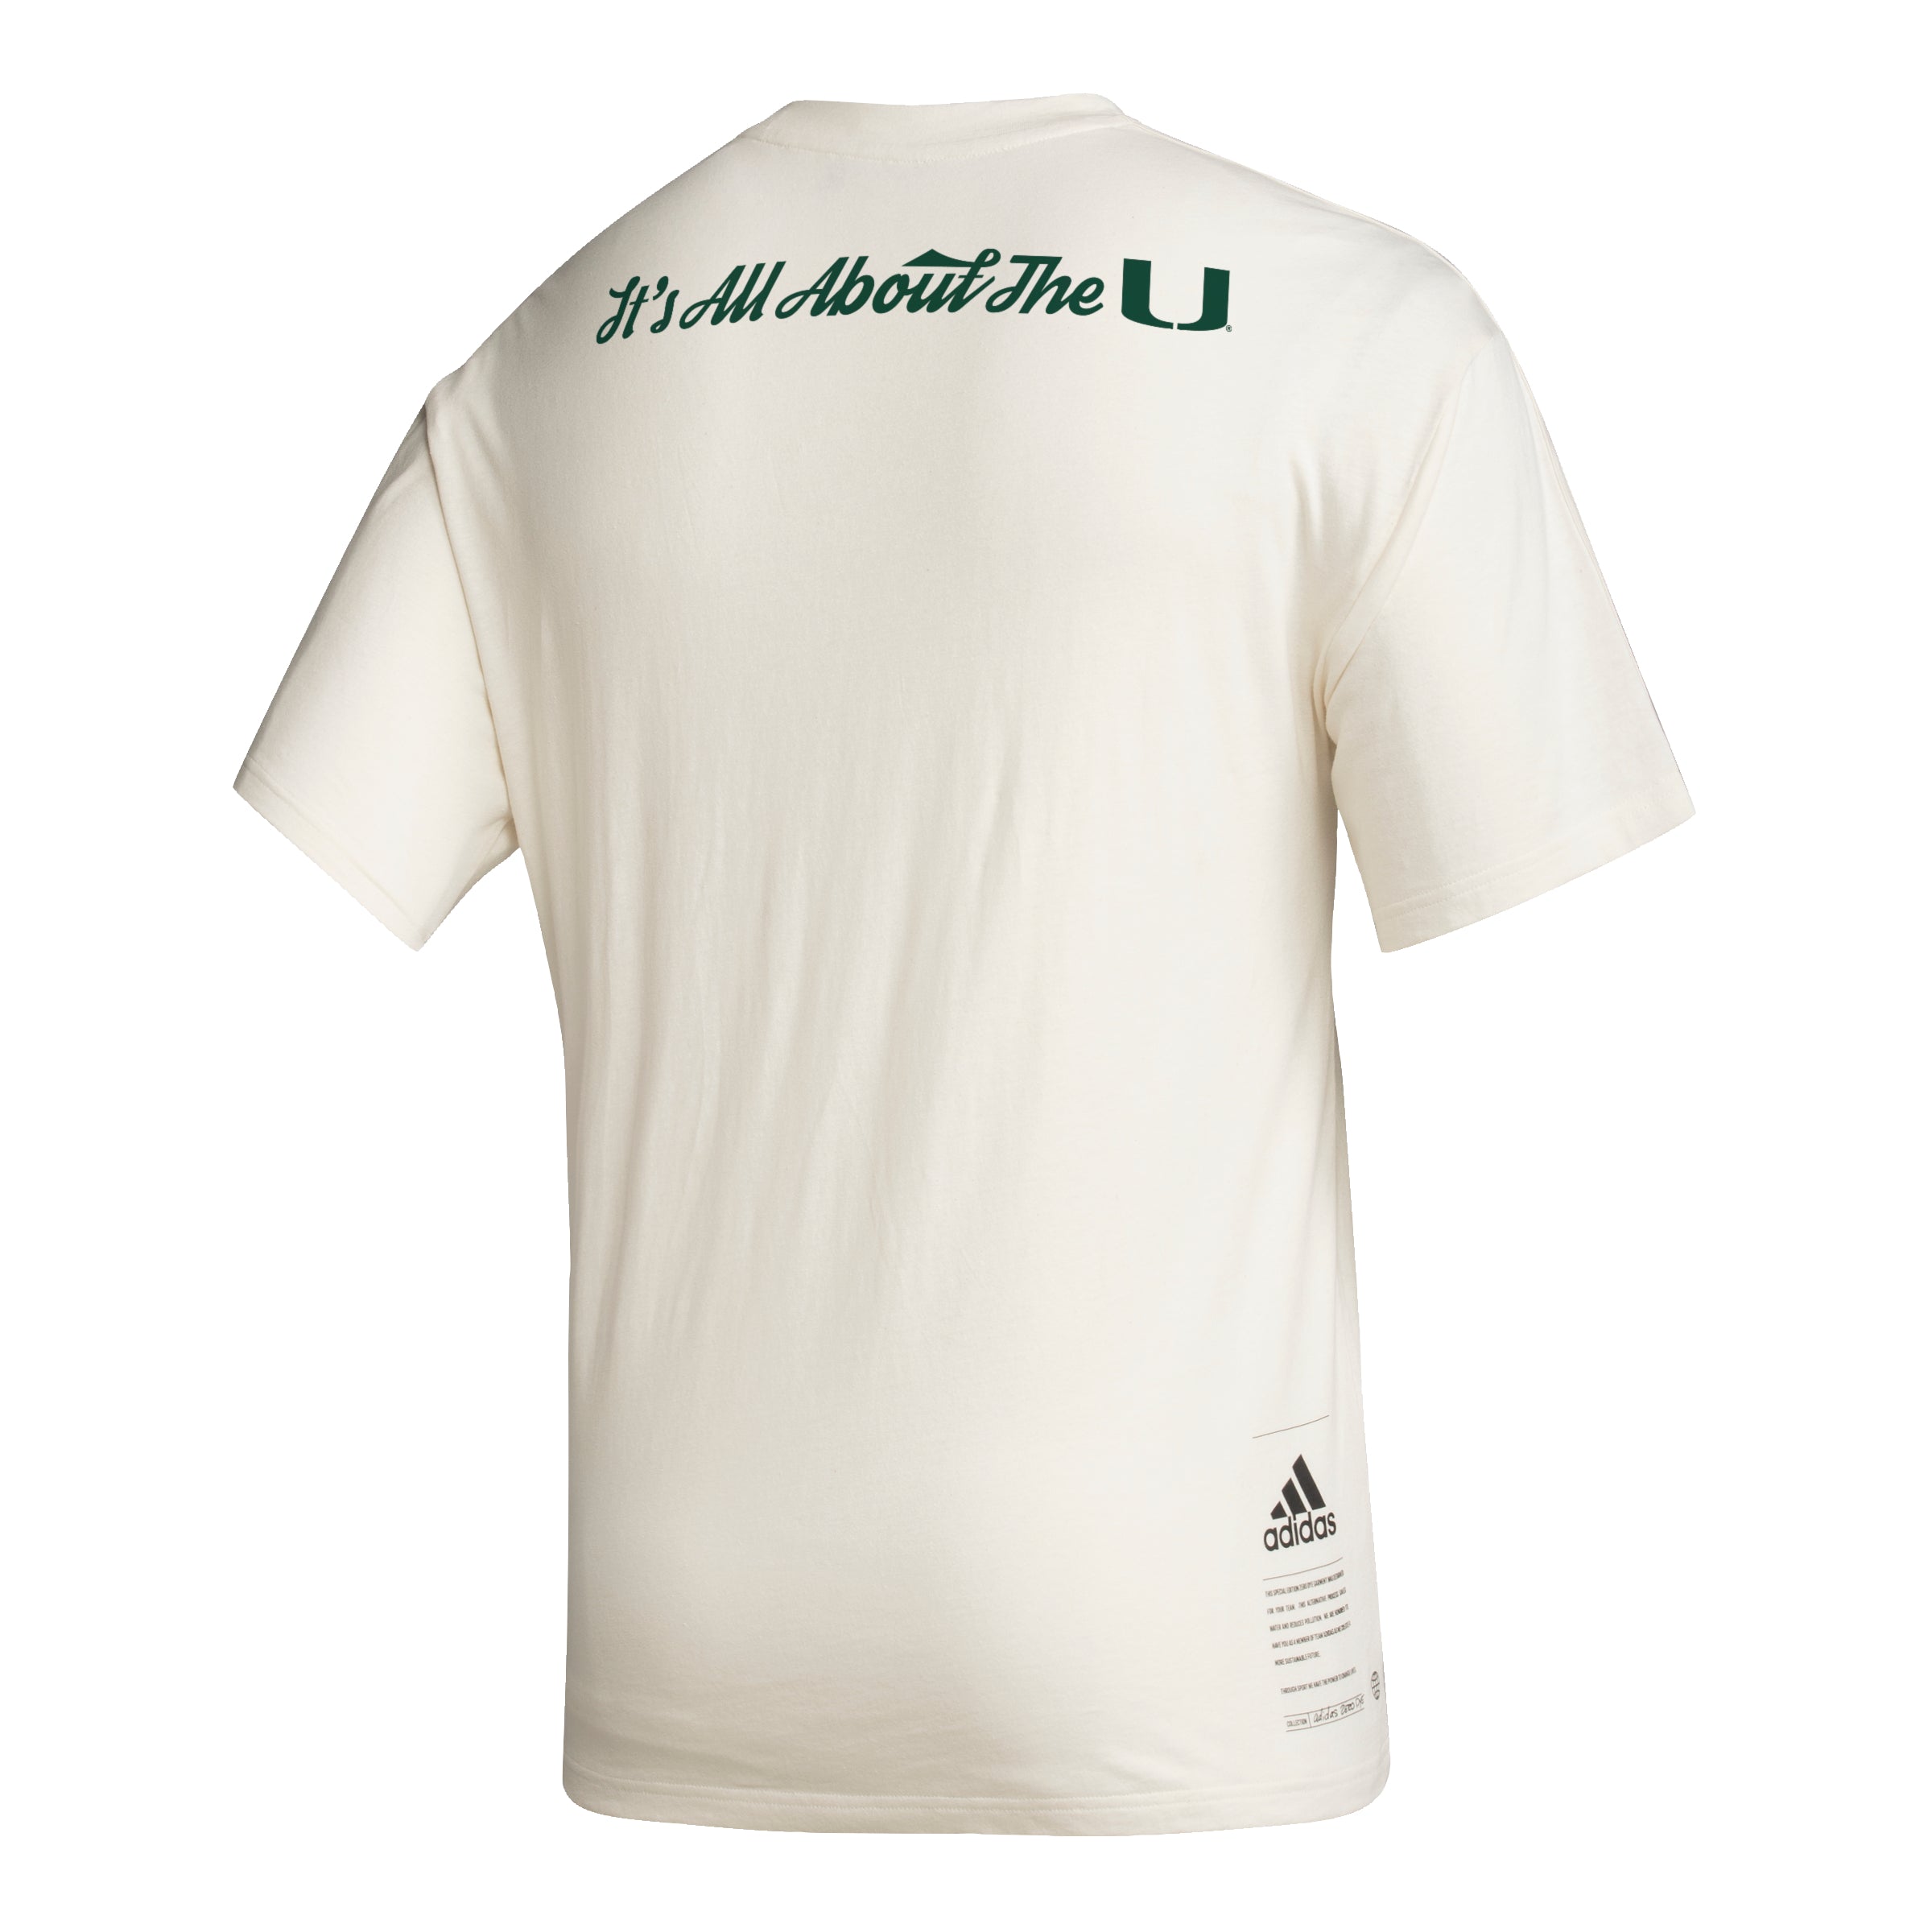 Adidas Men's Miami Hurricanes White Creator T-Shirt, Medium